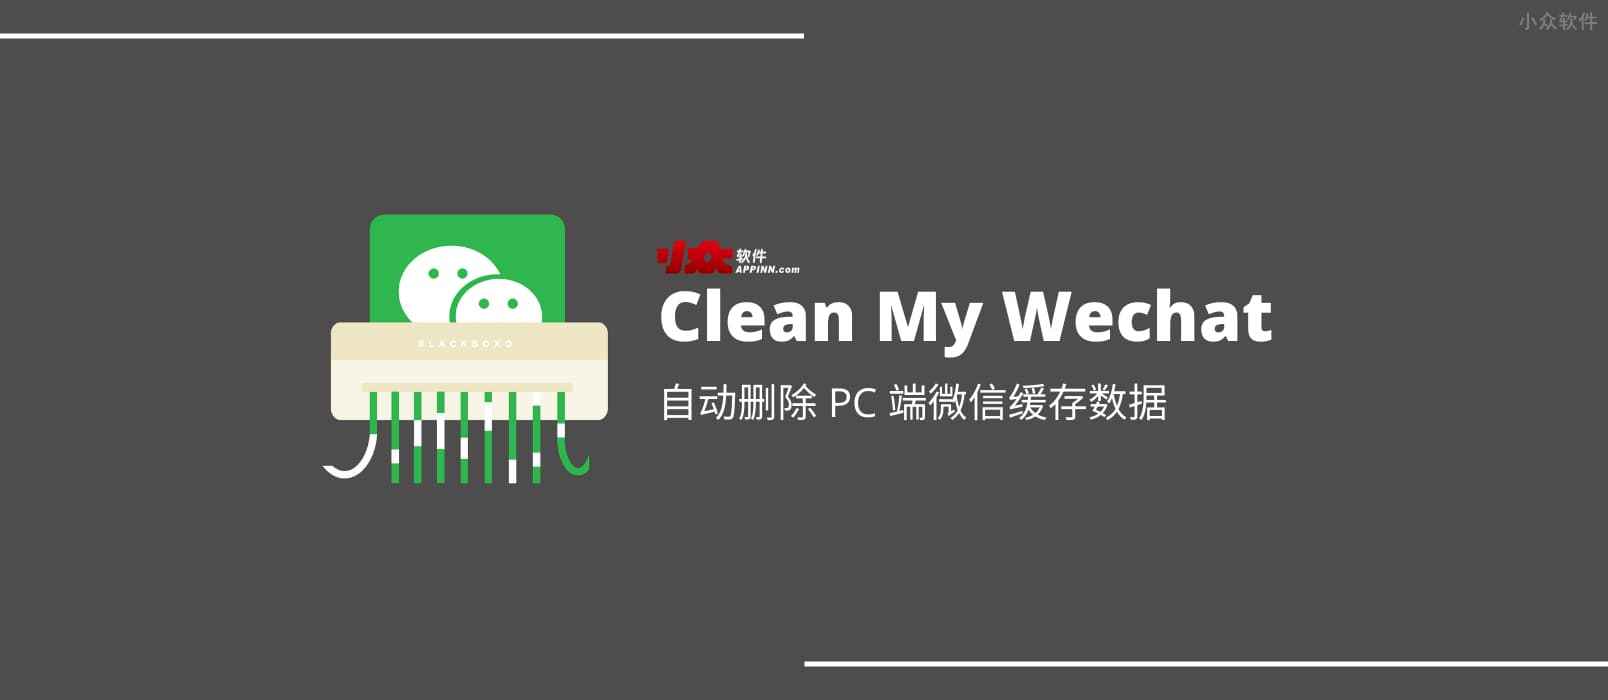 CleanMyWechat – 可根据时间，自动删除 PC 端微信缓存数据，并保留文字聊天记录